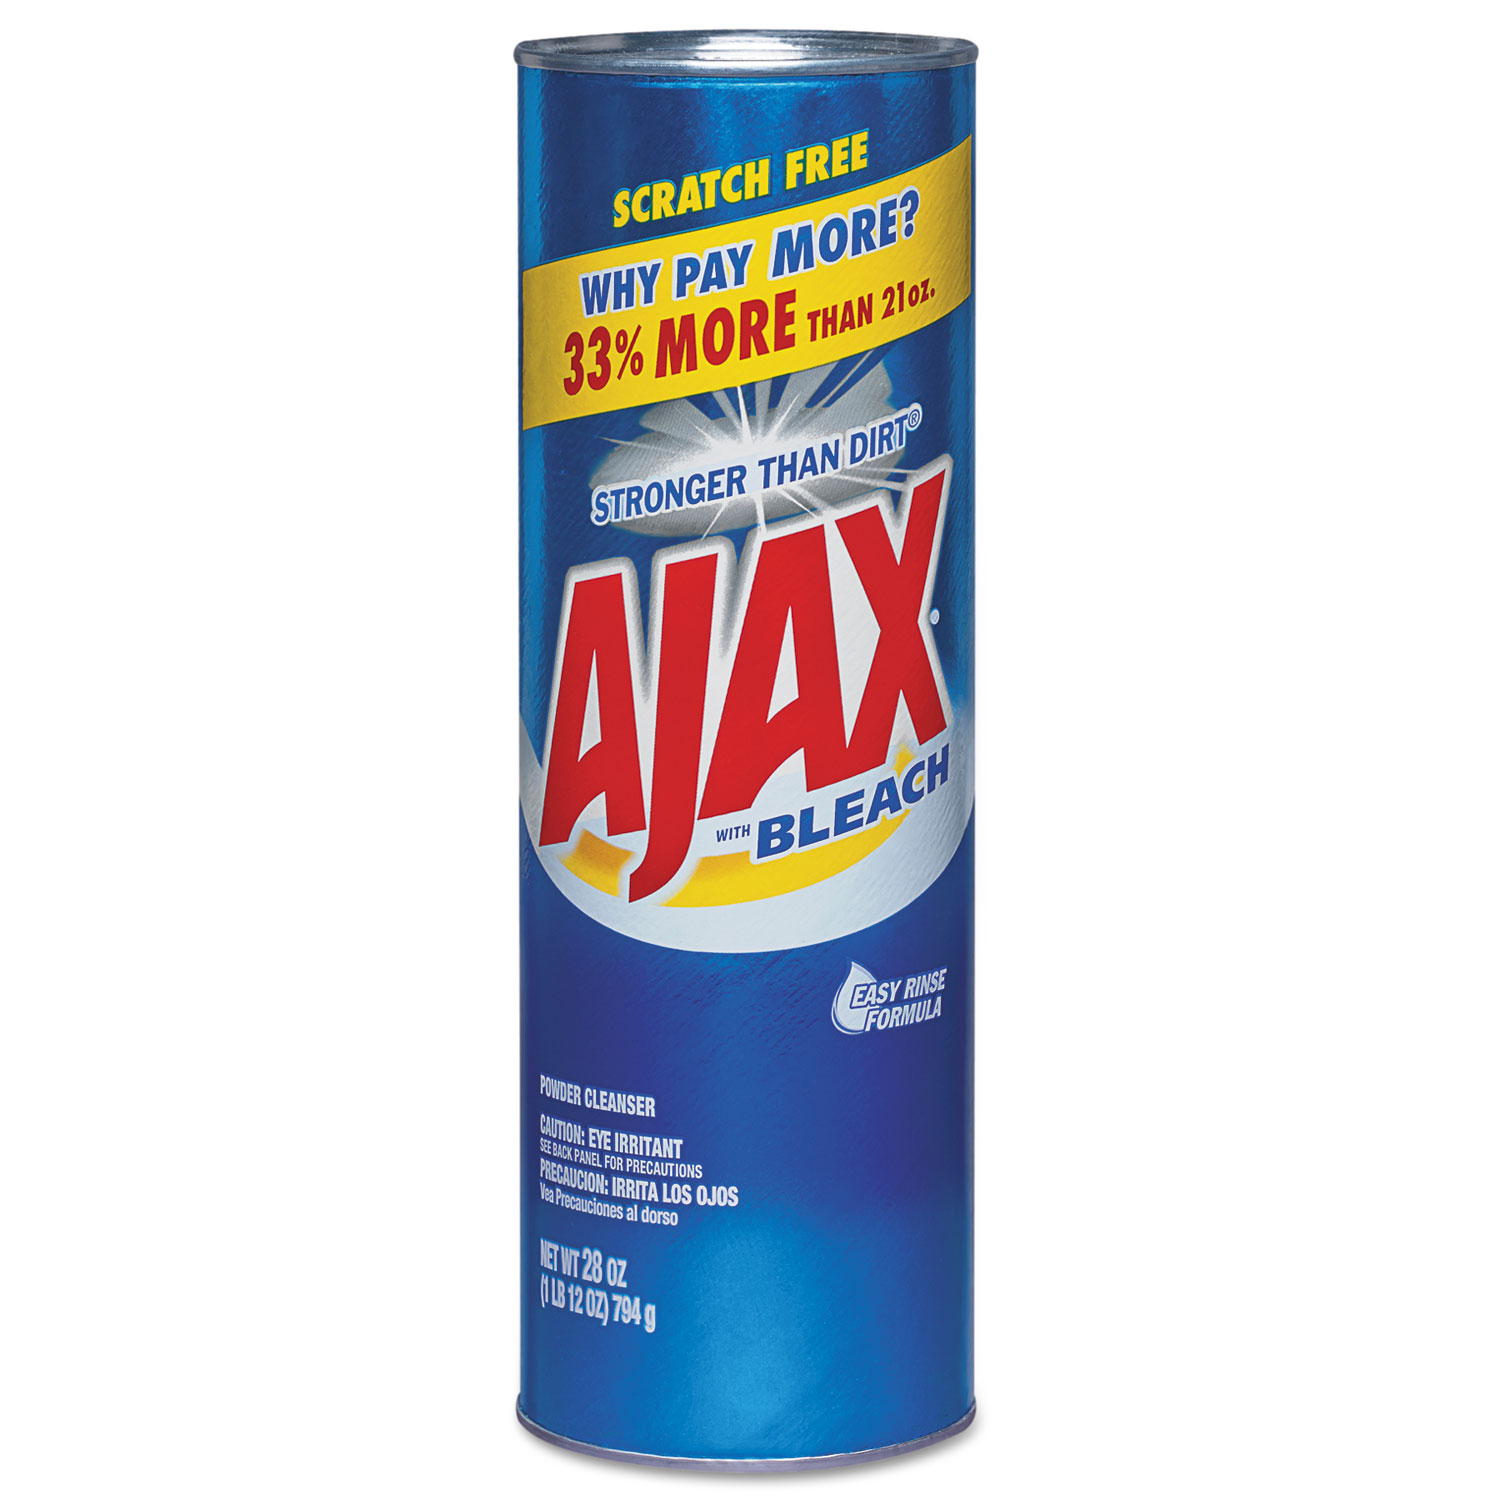  Ajax 05374 Powder Cleanser with Bleach, 28 oz Canister, 12/Carton (CPC05374) 